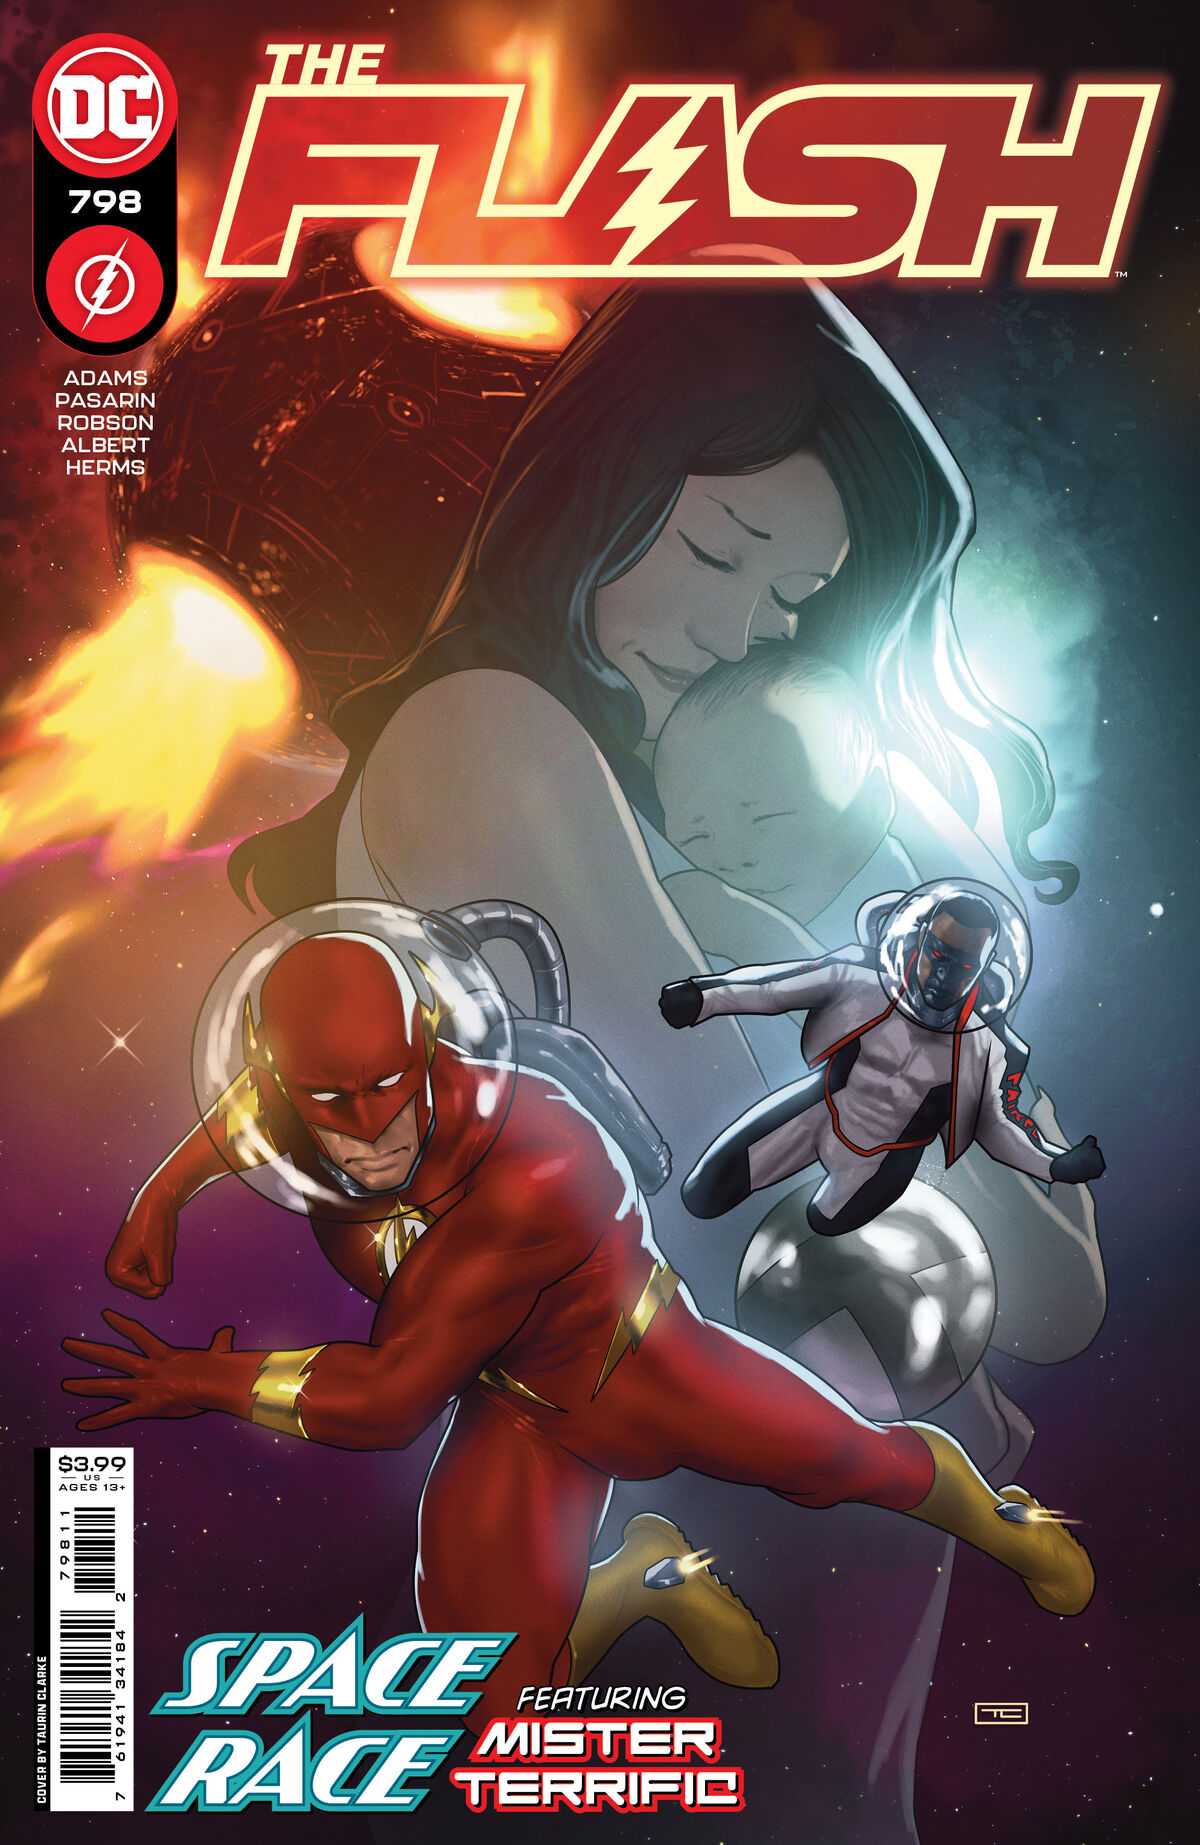 The Flash Vol 1 798 | DC Database | Fandom